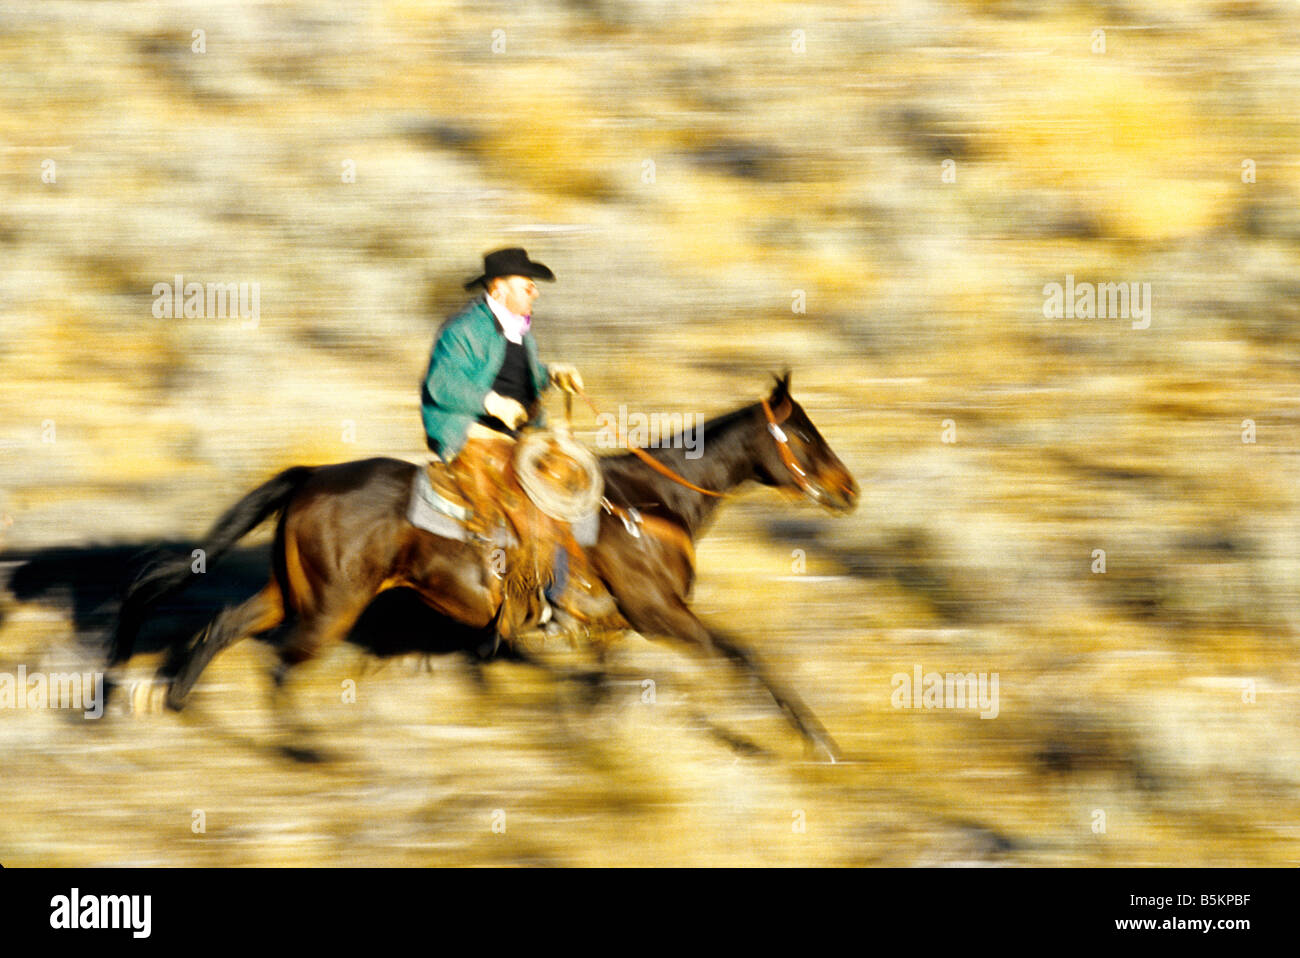 Horseback rider in full gallop Stock Photo